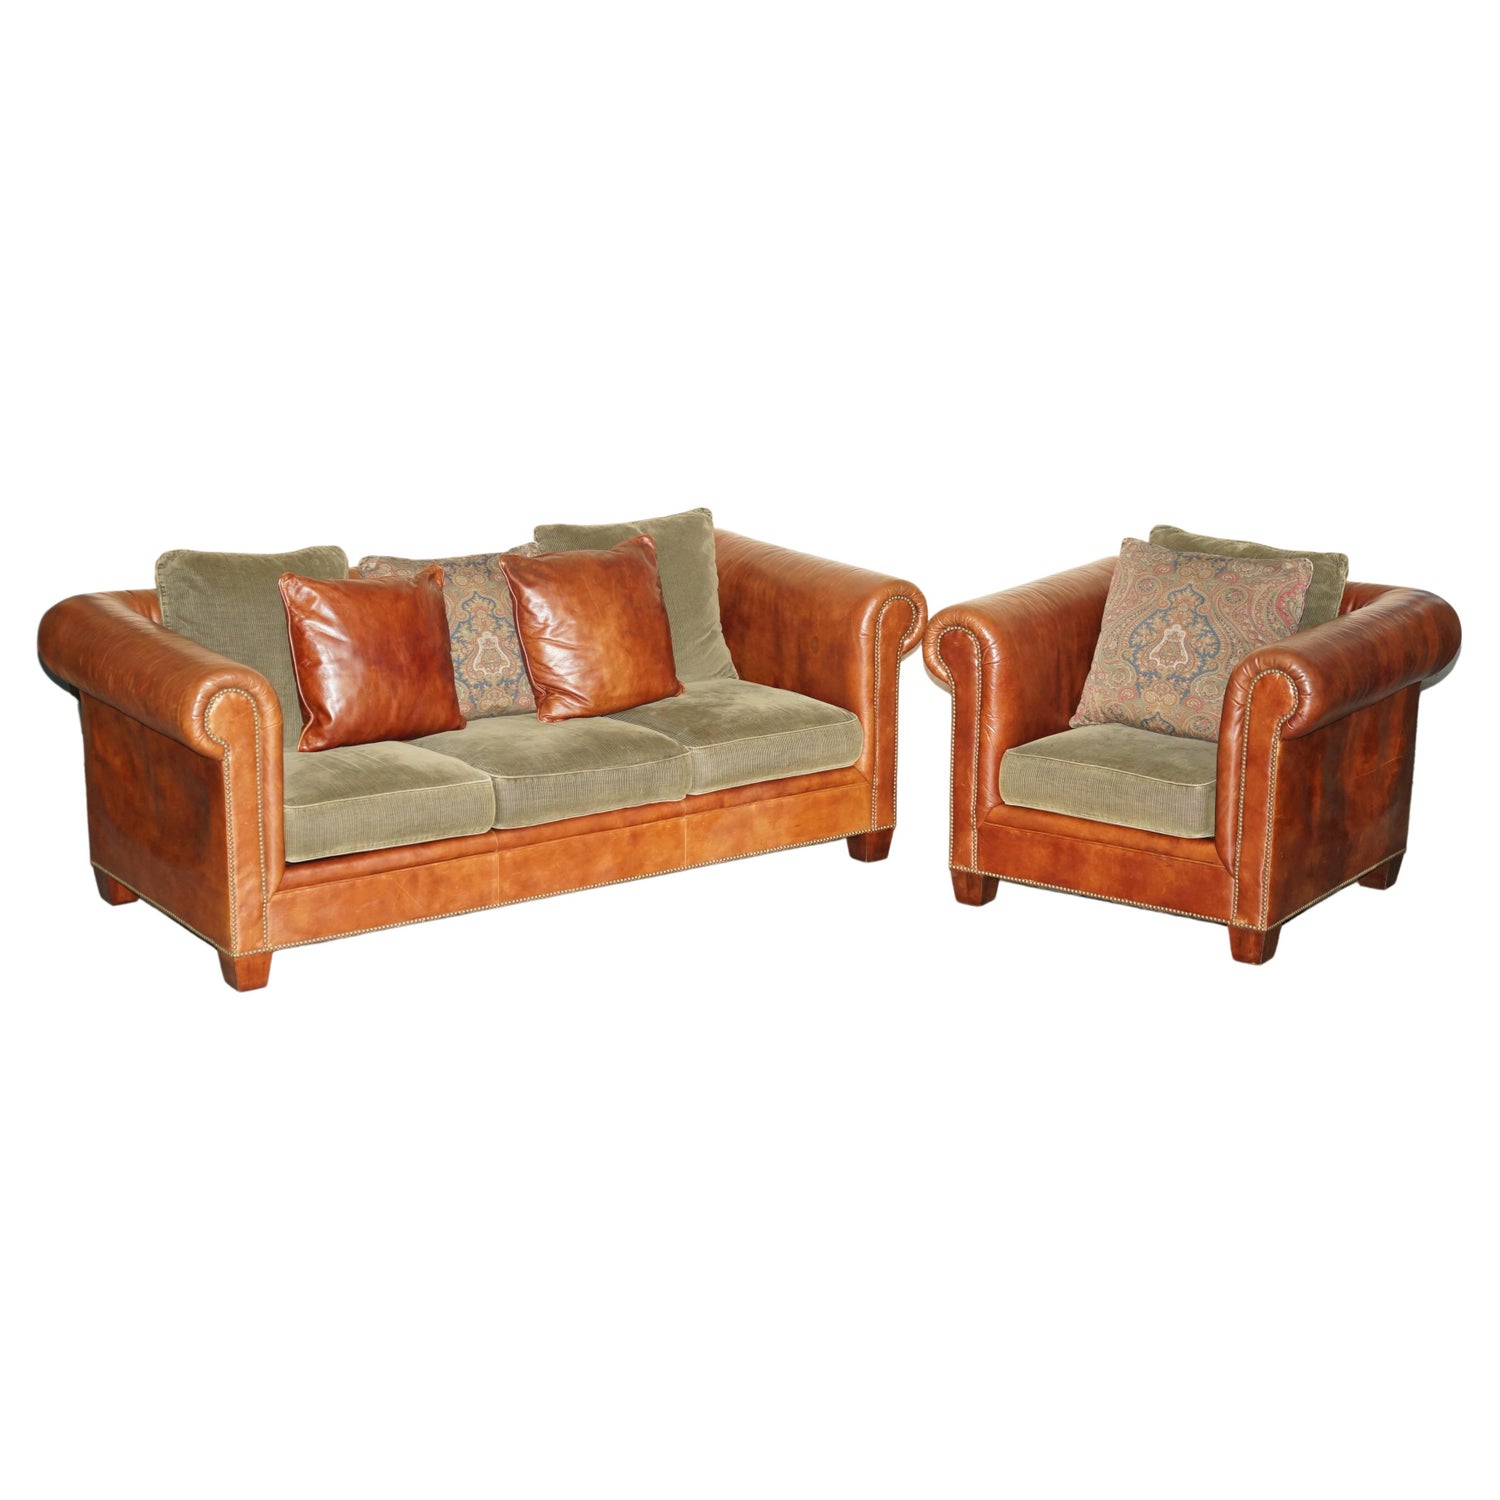 Ralph Lauren Leather Sofa - 7 For Sale on 1stDibs | ralph lauren leather  couch, ralph lauren leather couch for sale, ralph lauren leather sofas